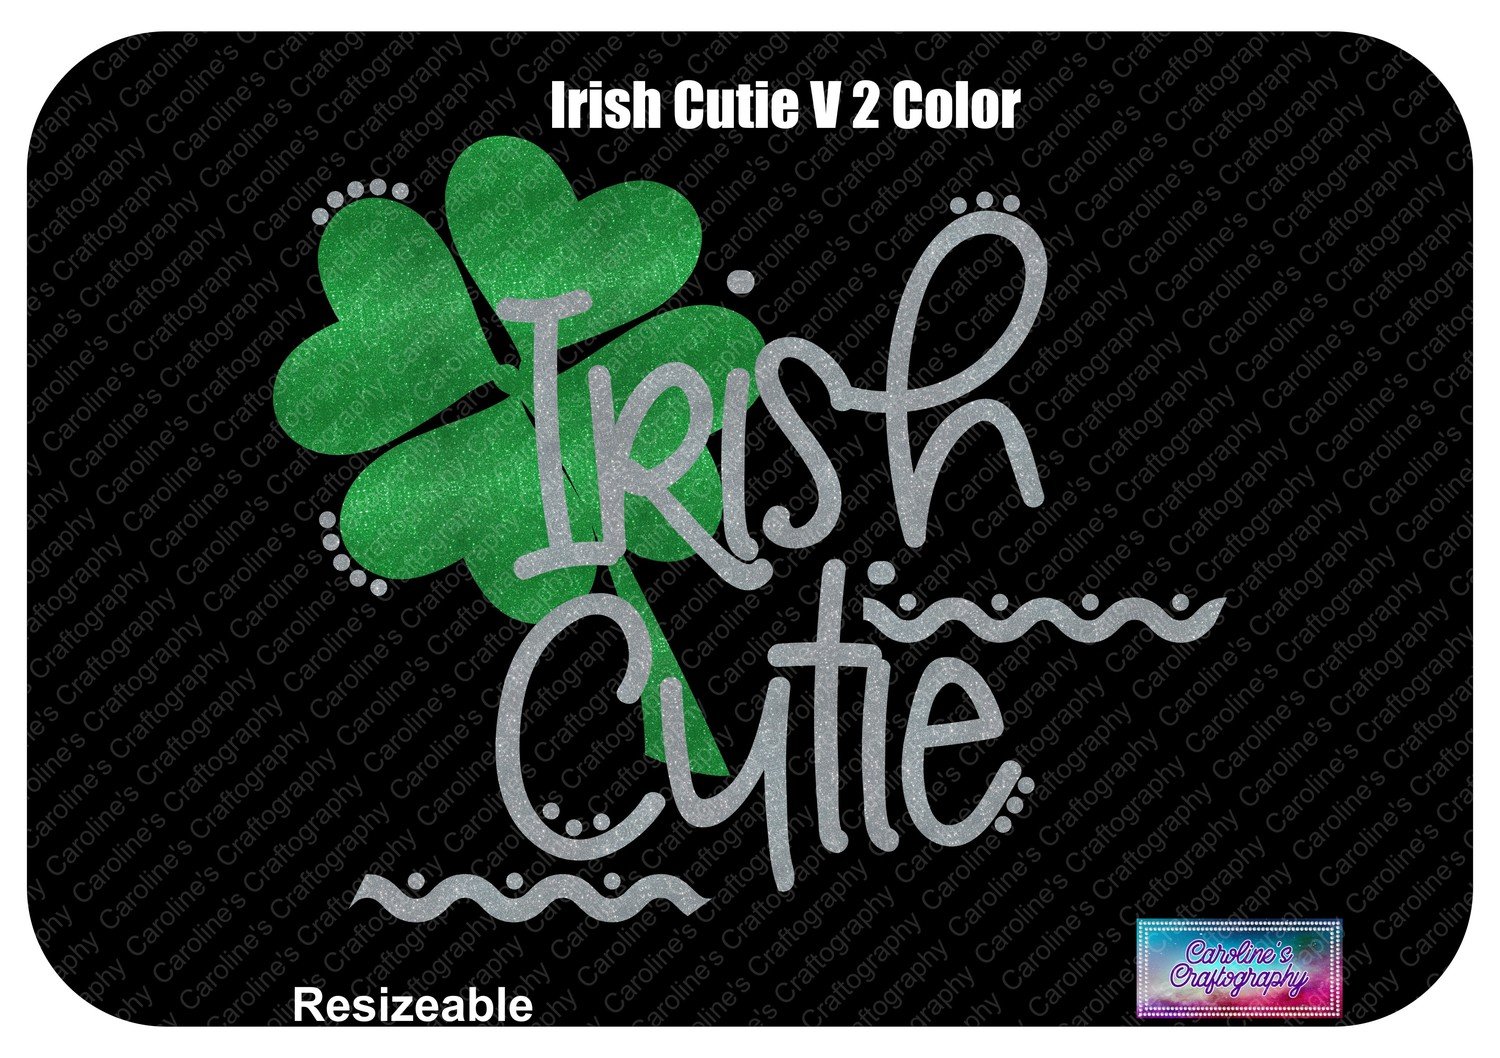 Irish Cutie Vinyl 2 Color